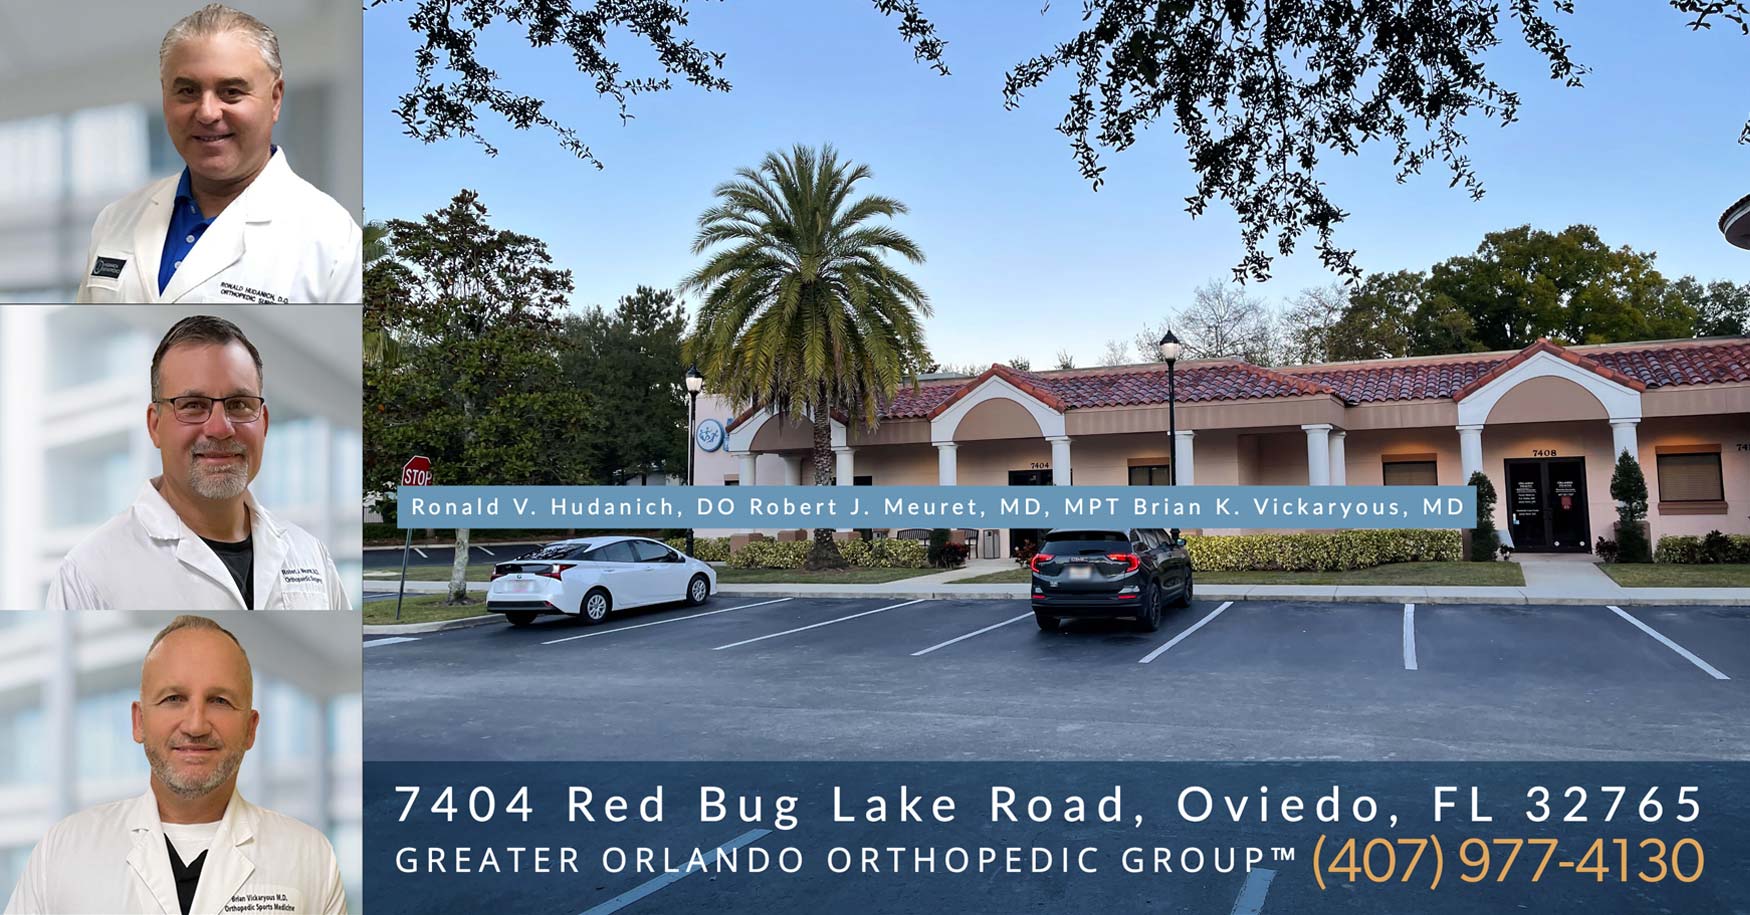 Greater Orlando Orthopedic Group - 7404 Red Bug Lake Road, Oviedo FL 32765